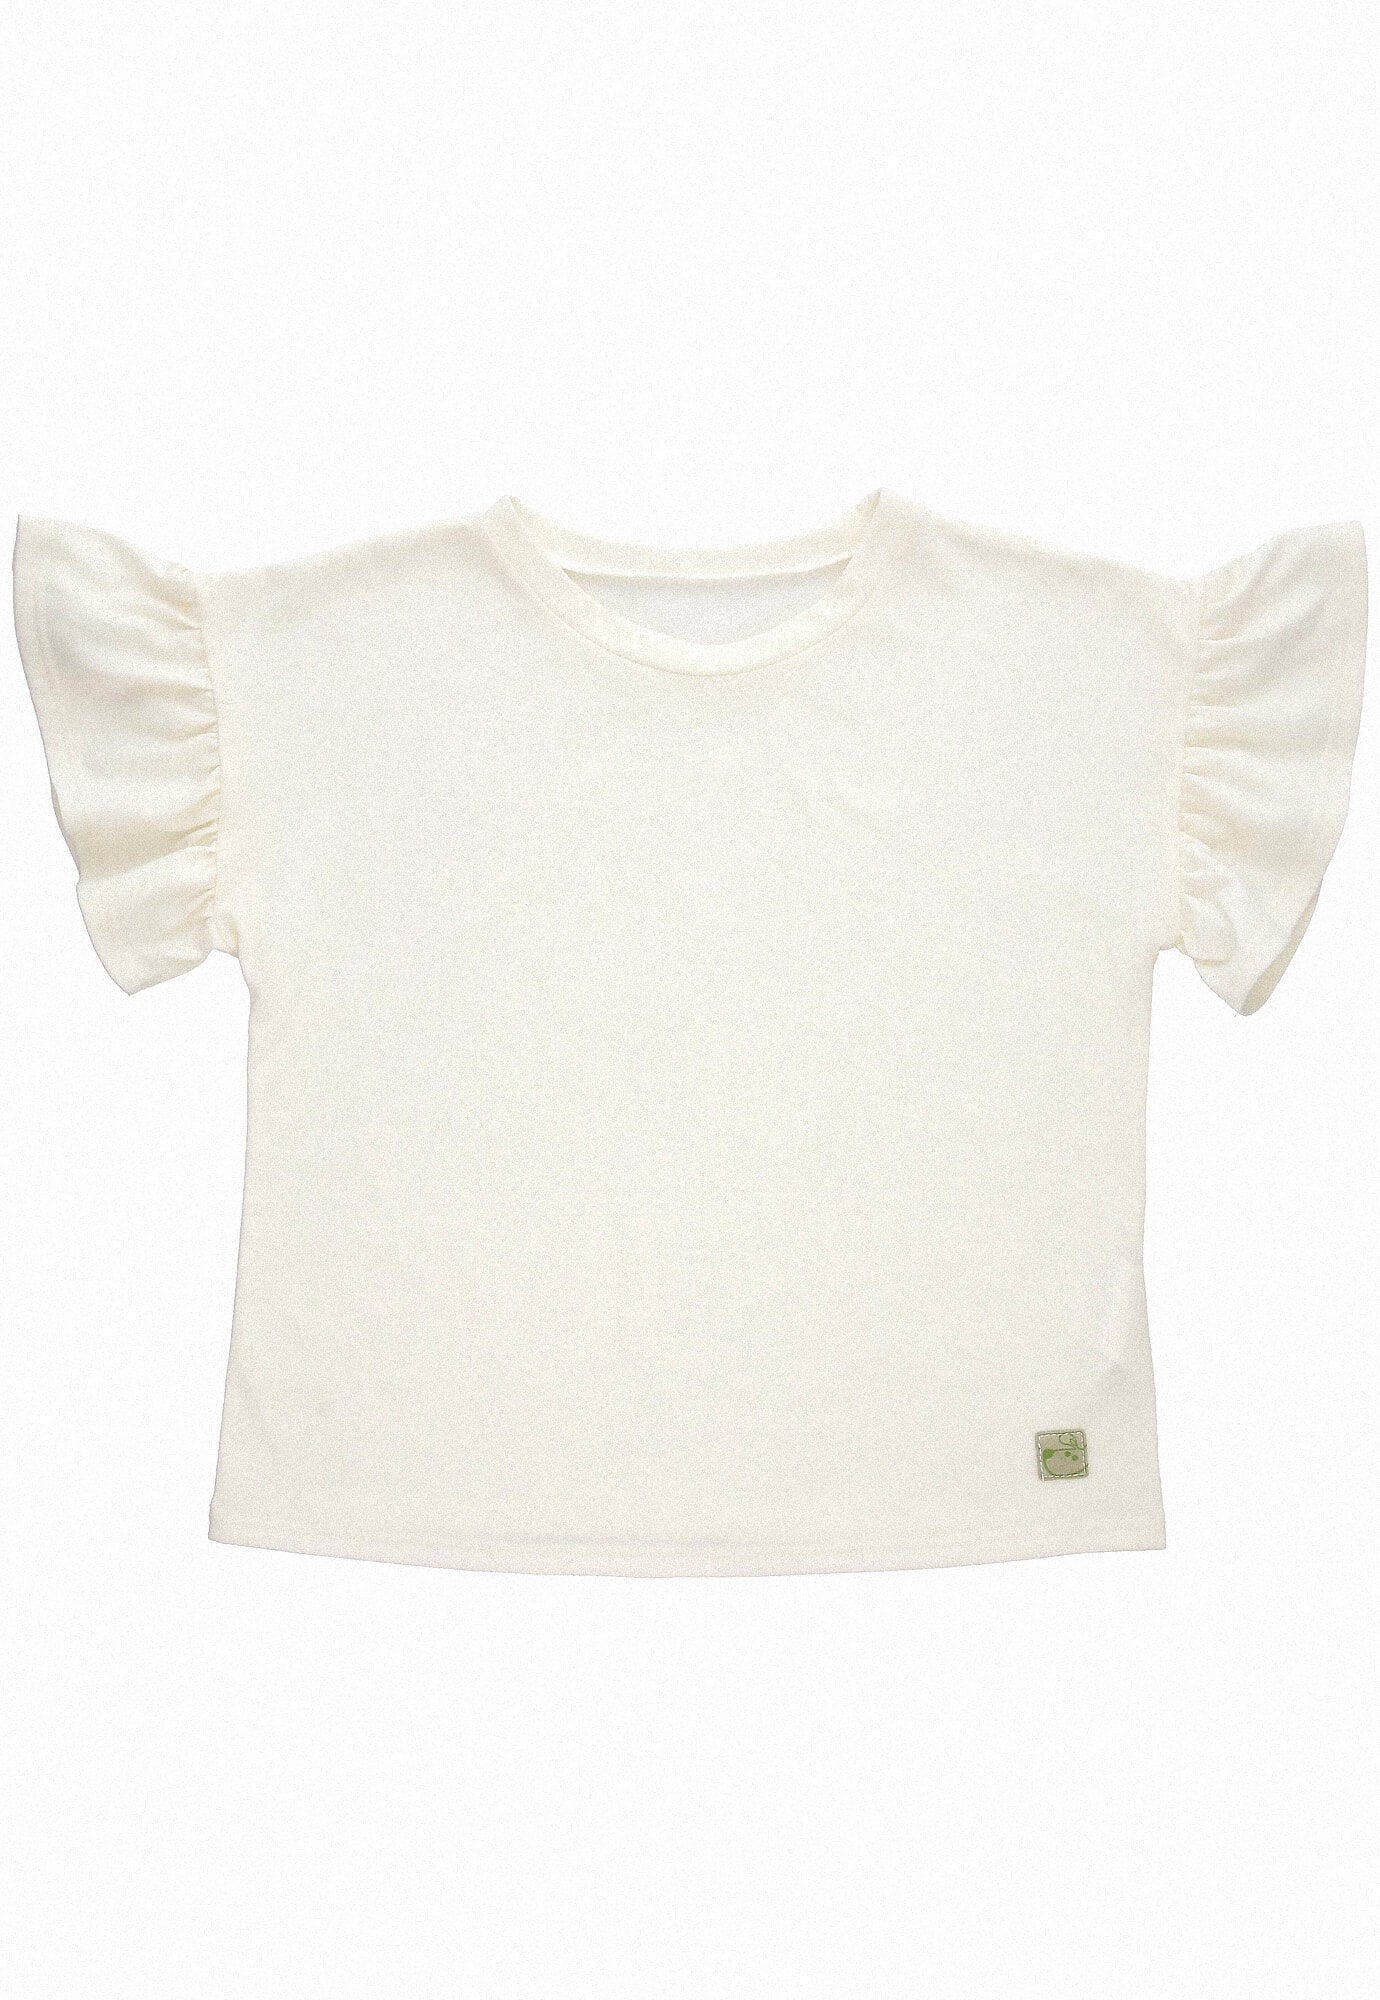 Camiseta ivory fondo entero, hombro rodado con bolero y cuello redondo para bebé niña